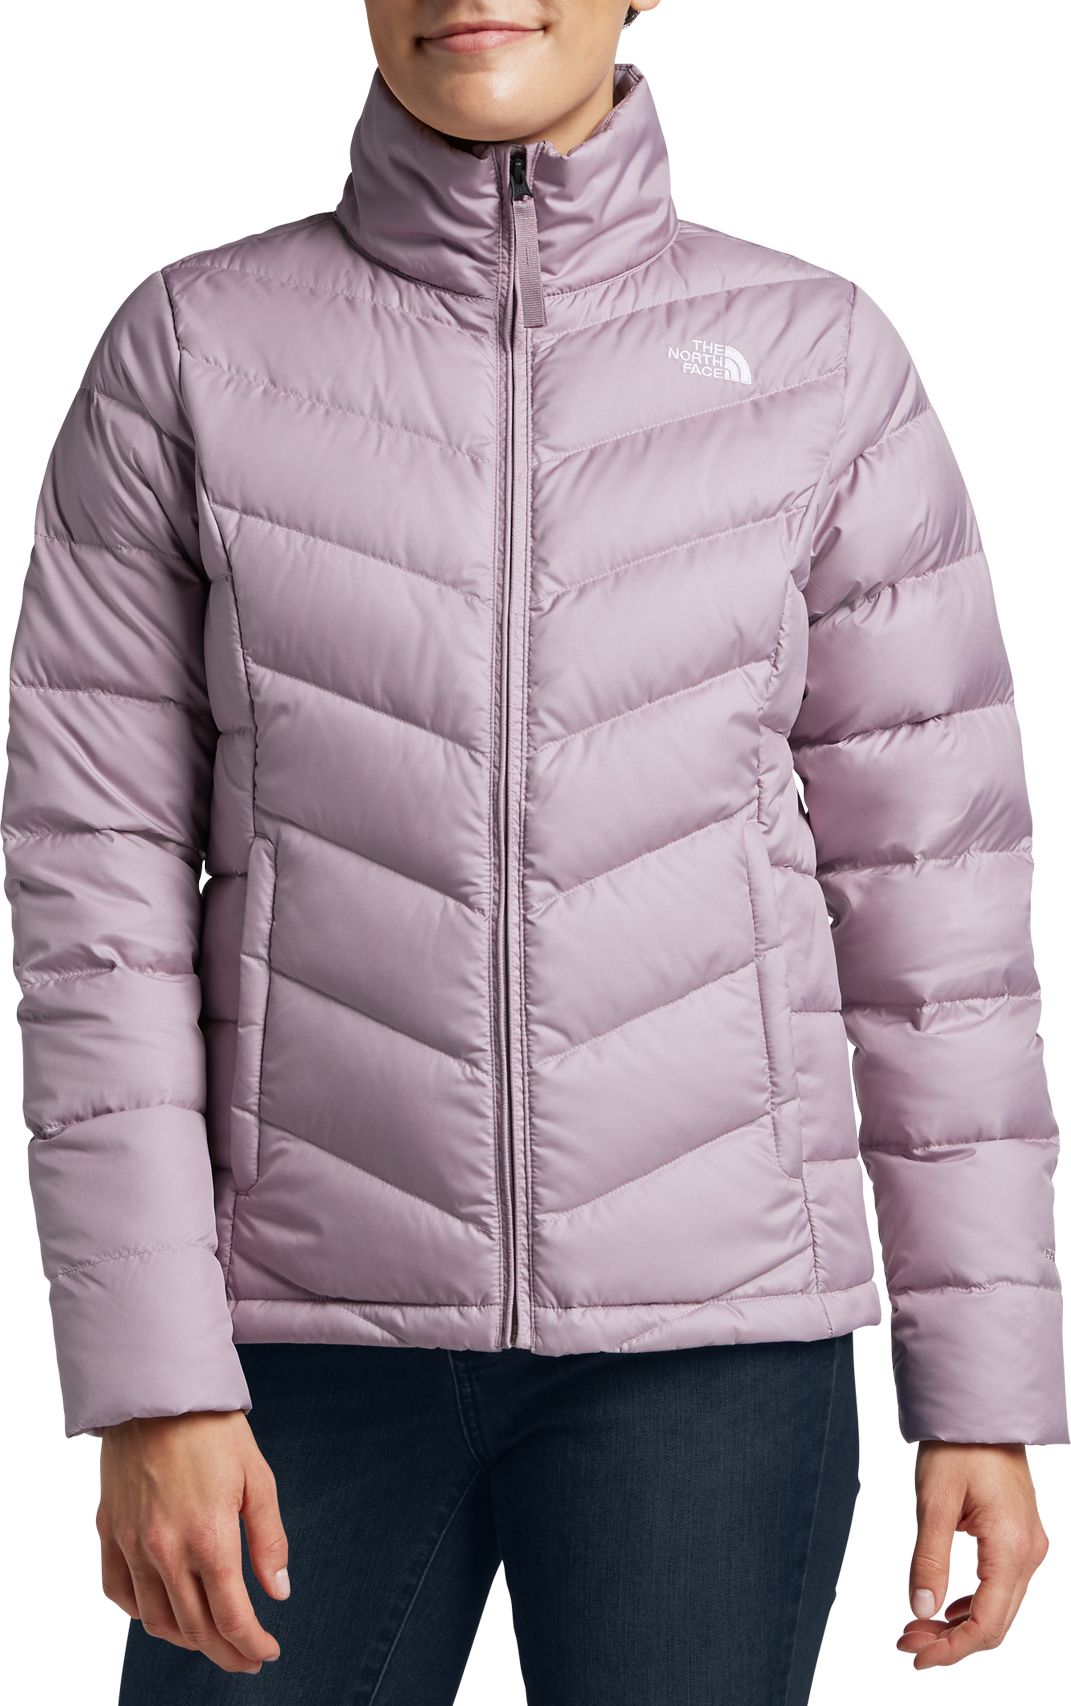 women's alpz jacket